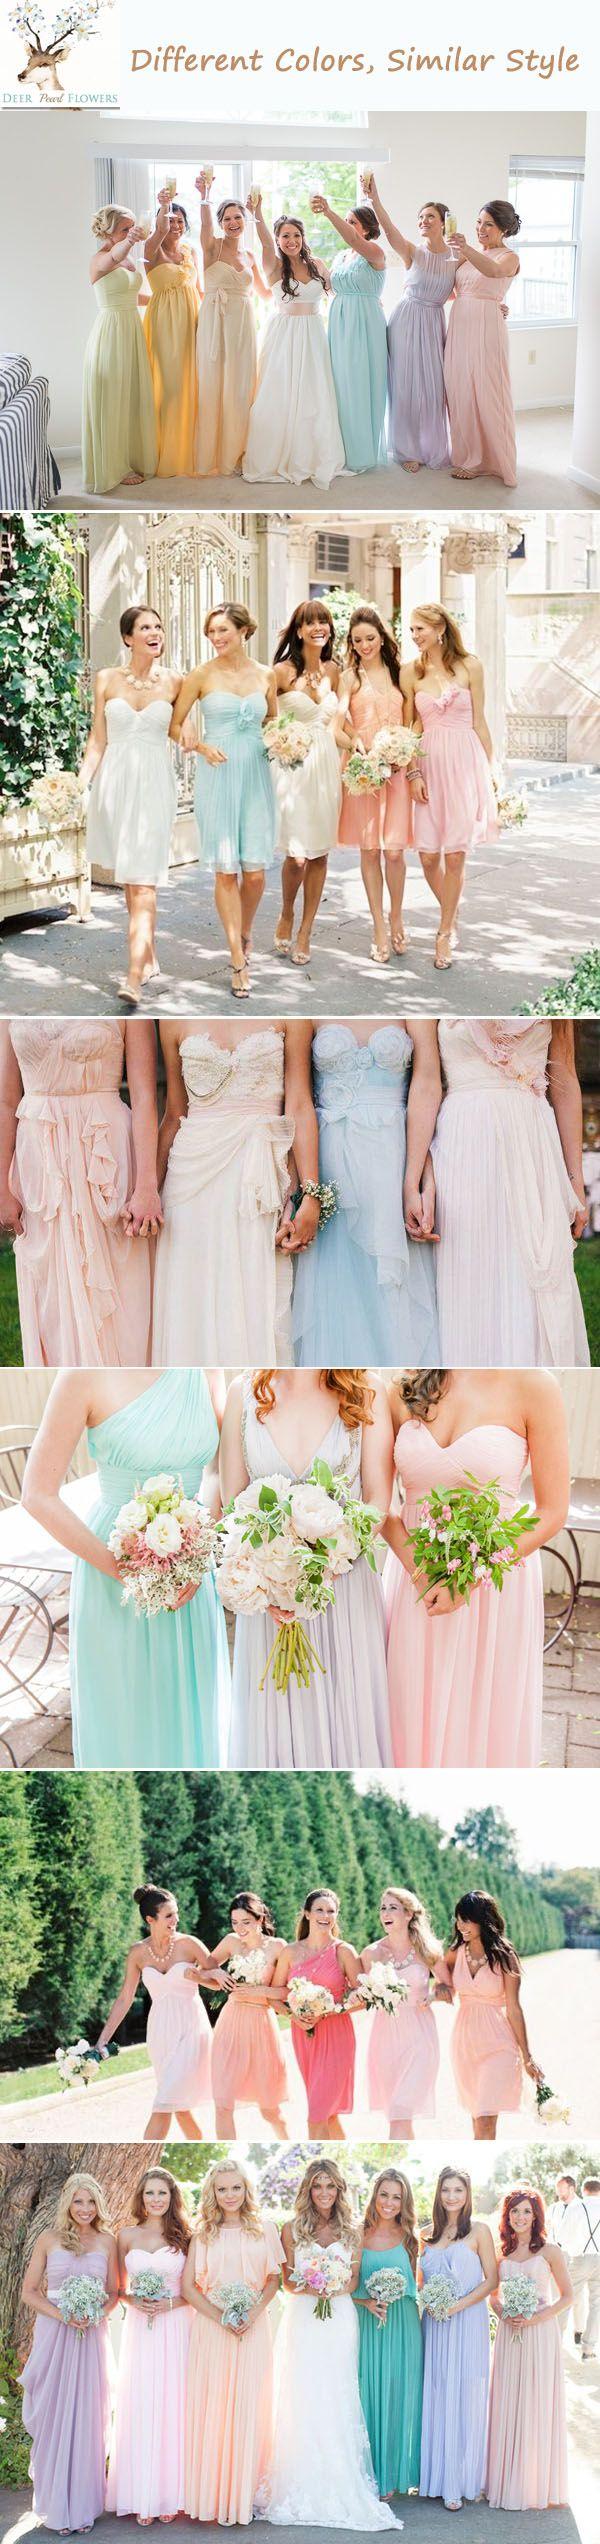 زفاف - Top 6 Ways To Do Mismatched Bridesmaid Dresses